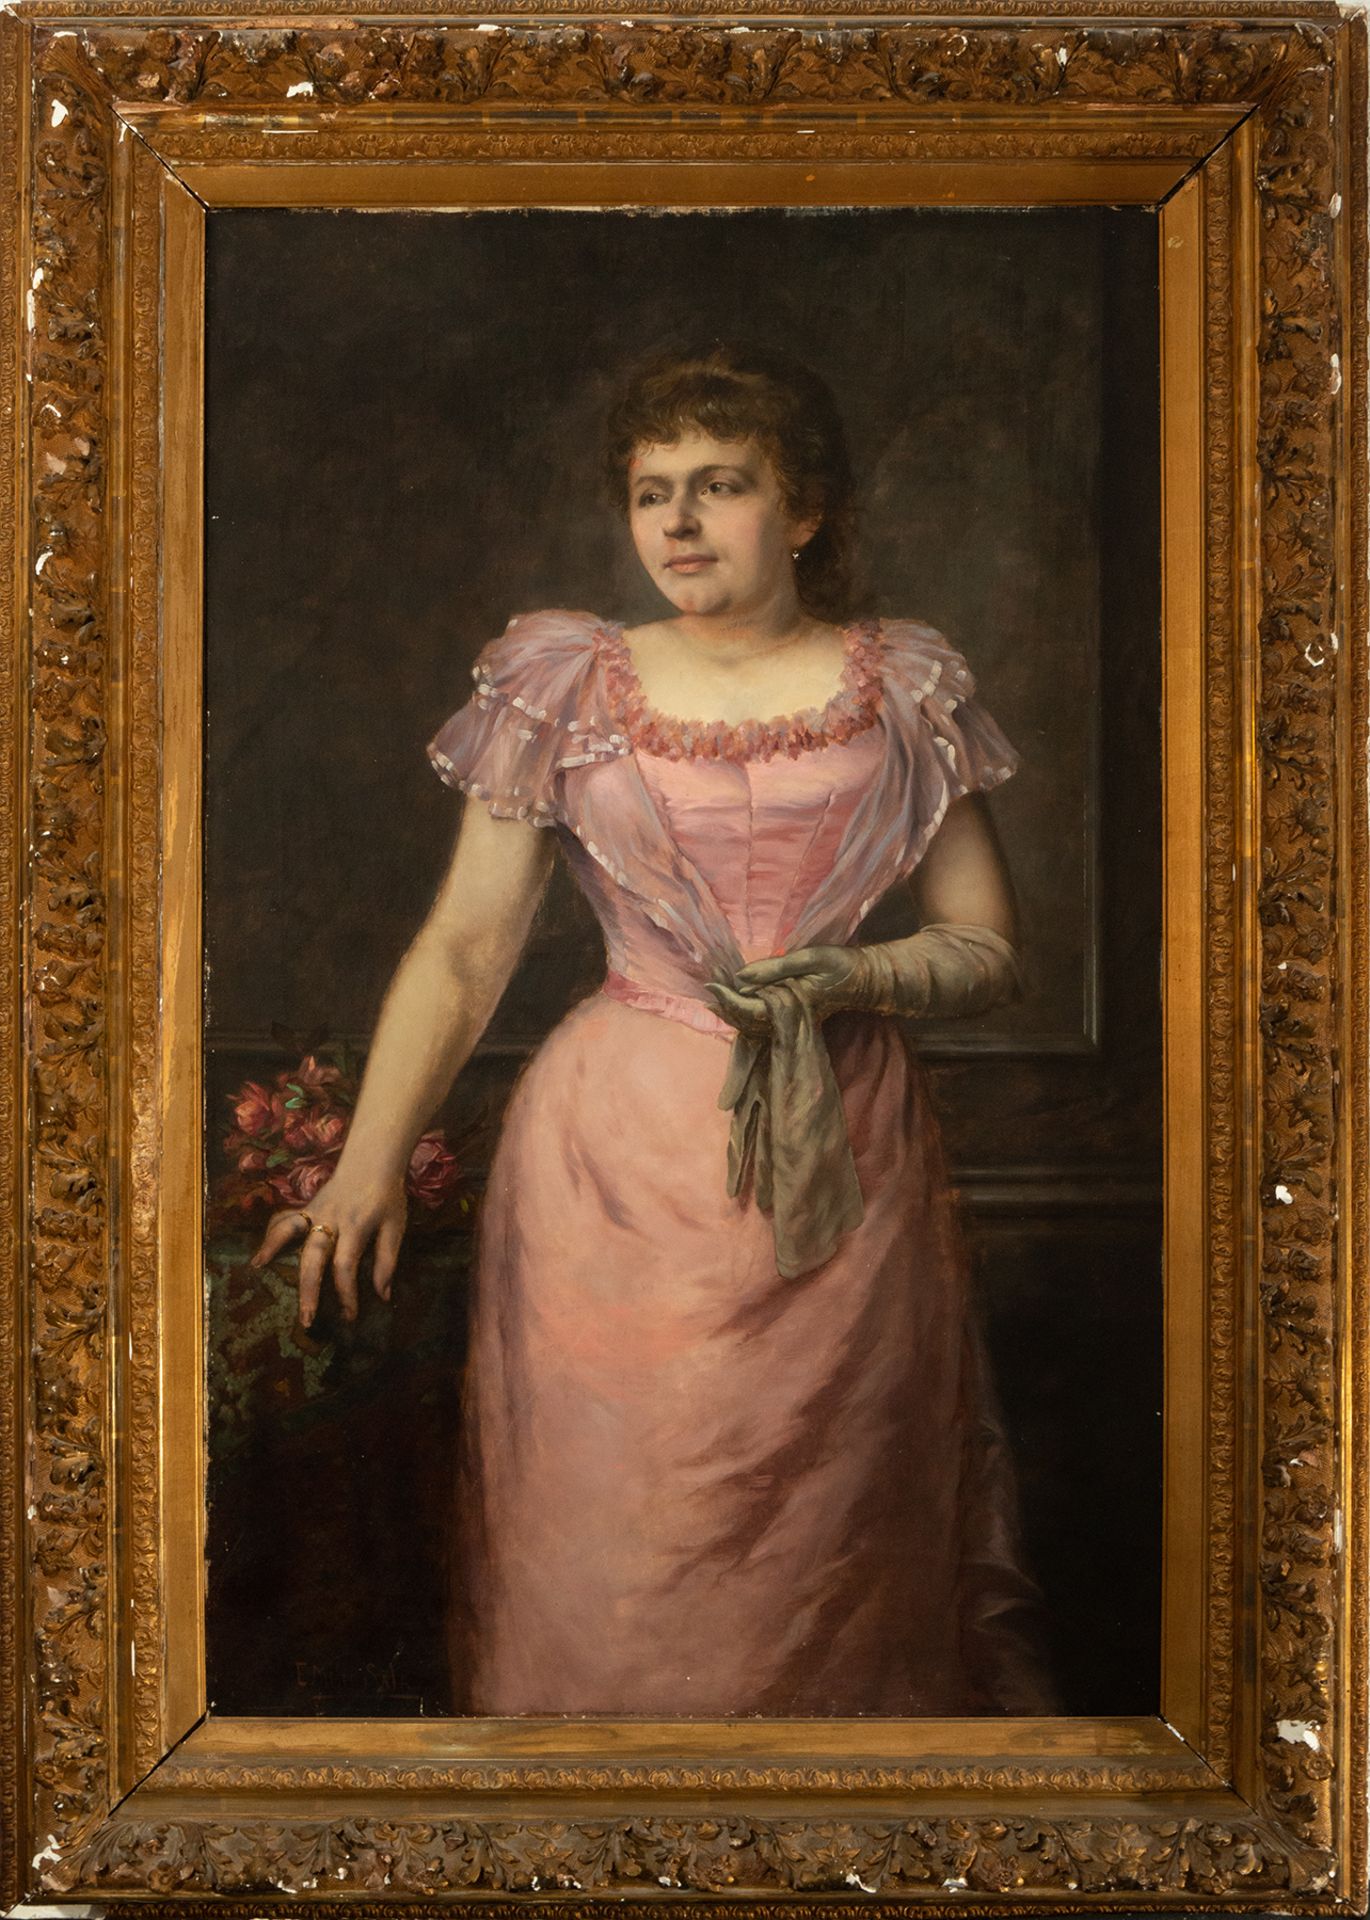 Portrait of a Bourgeois Lady, Emilio Sala, 19th century Spanish school